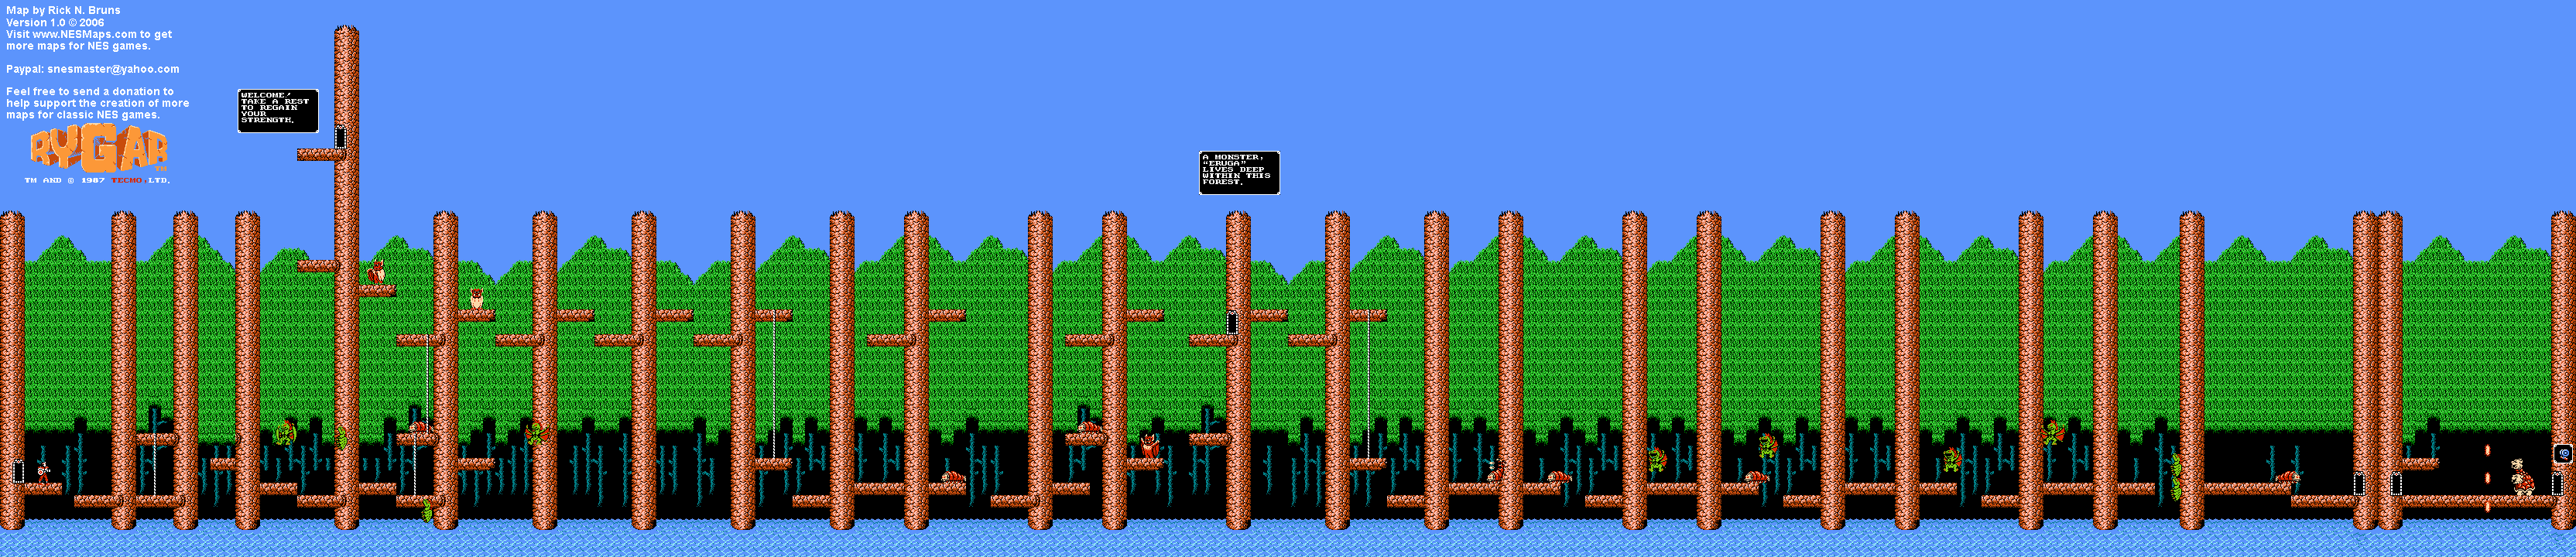 Rygar - Eruga - NES Map